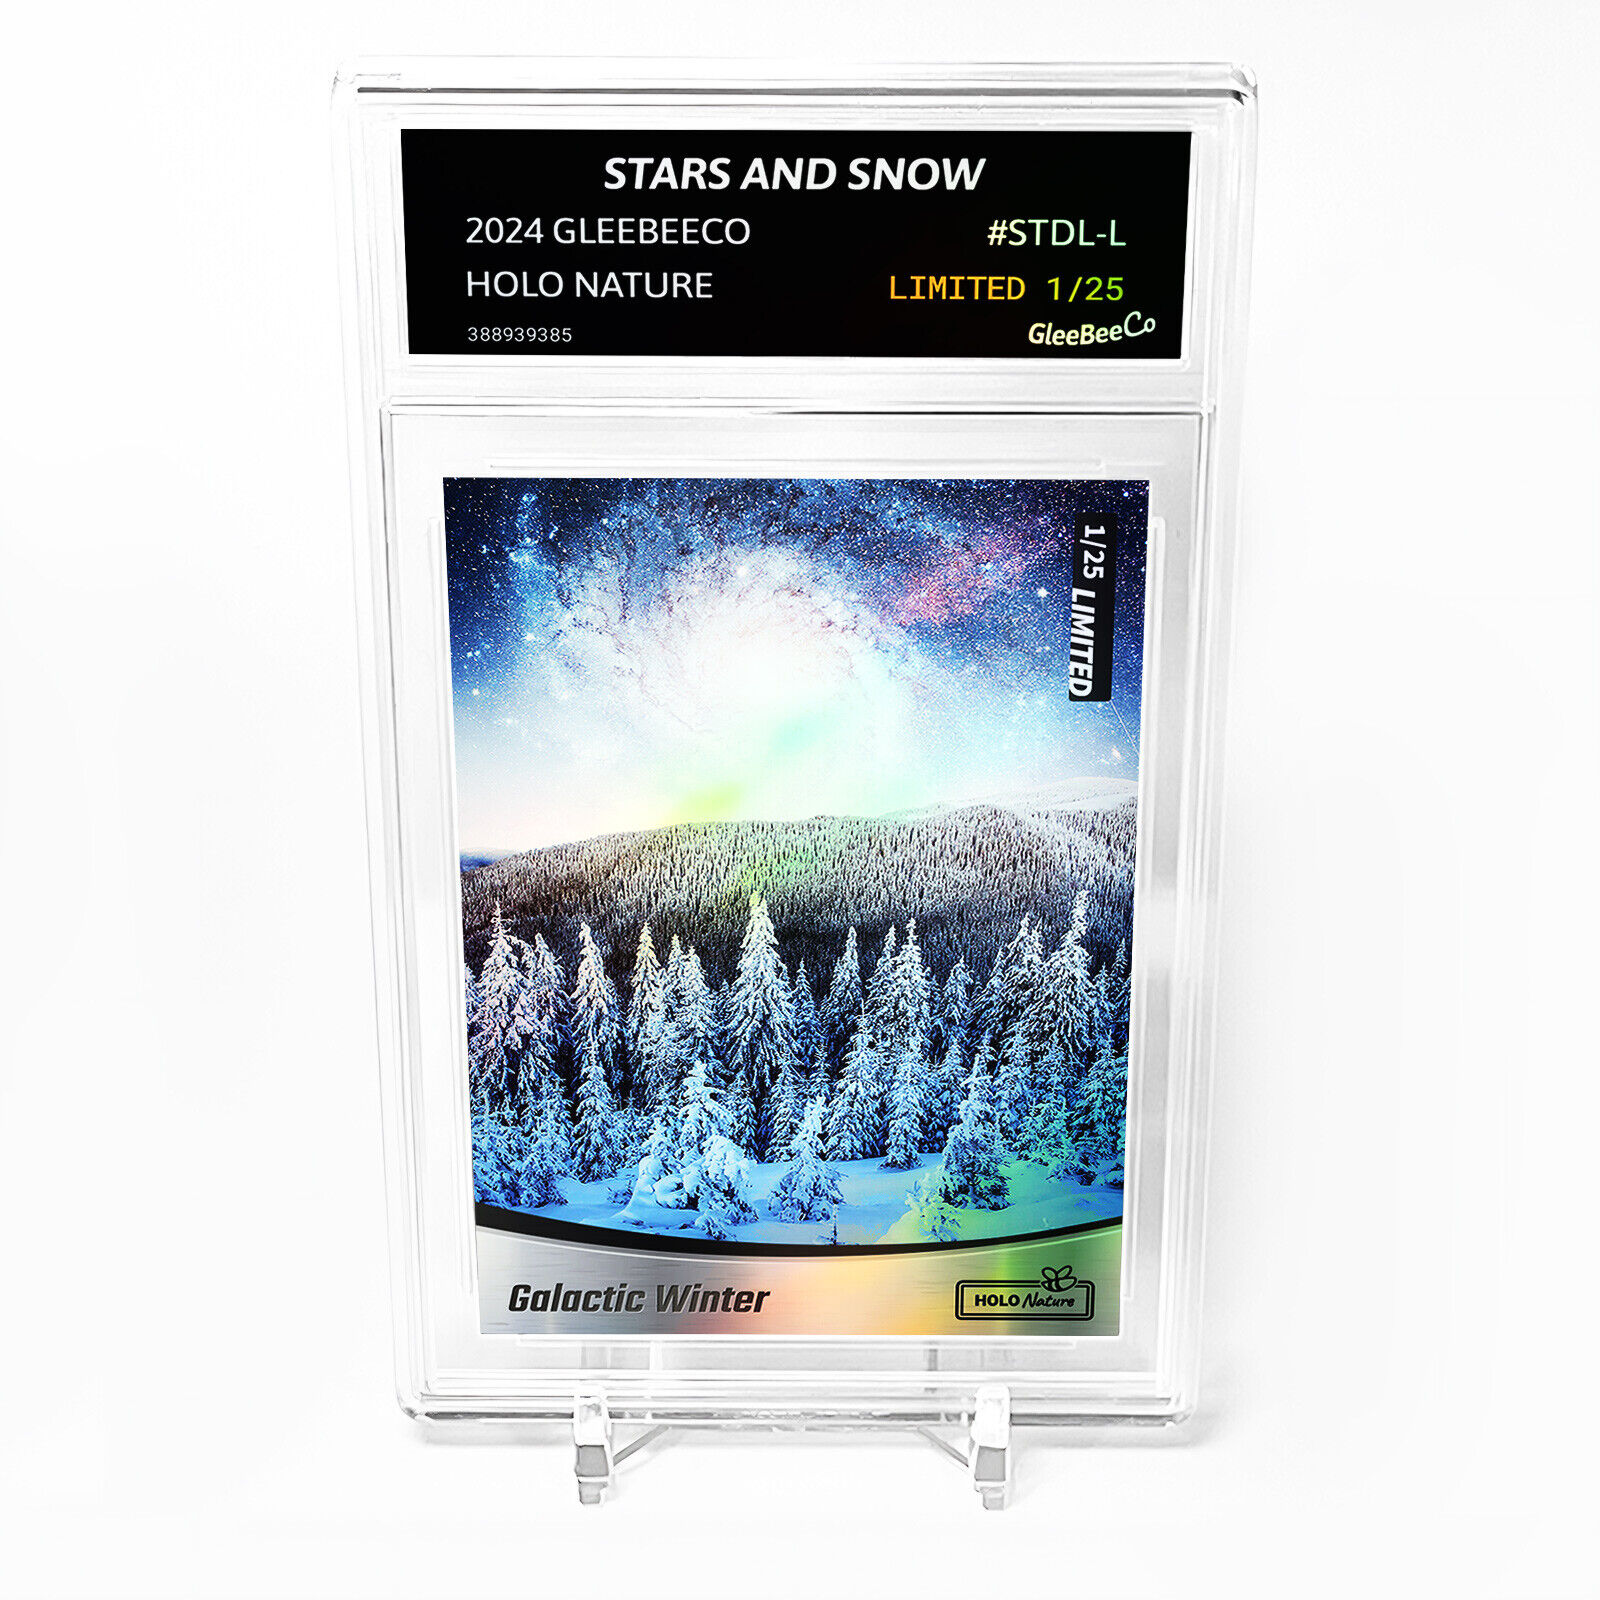 STARS AND SNOW Photo Card 2024 GleeBeeCo Holo Nature Slabbed #STDL-L /25